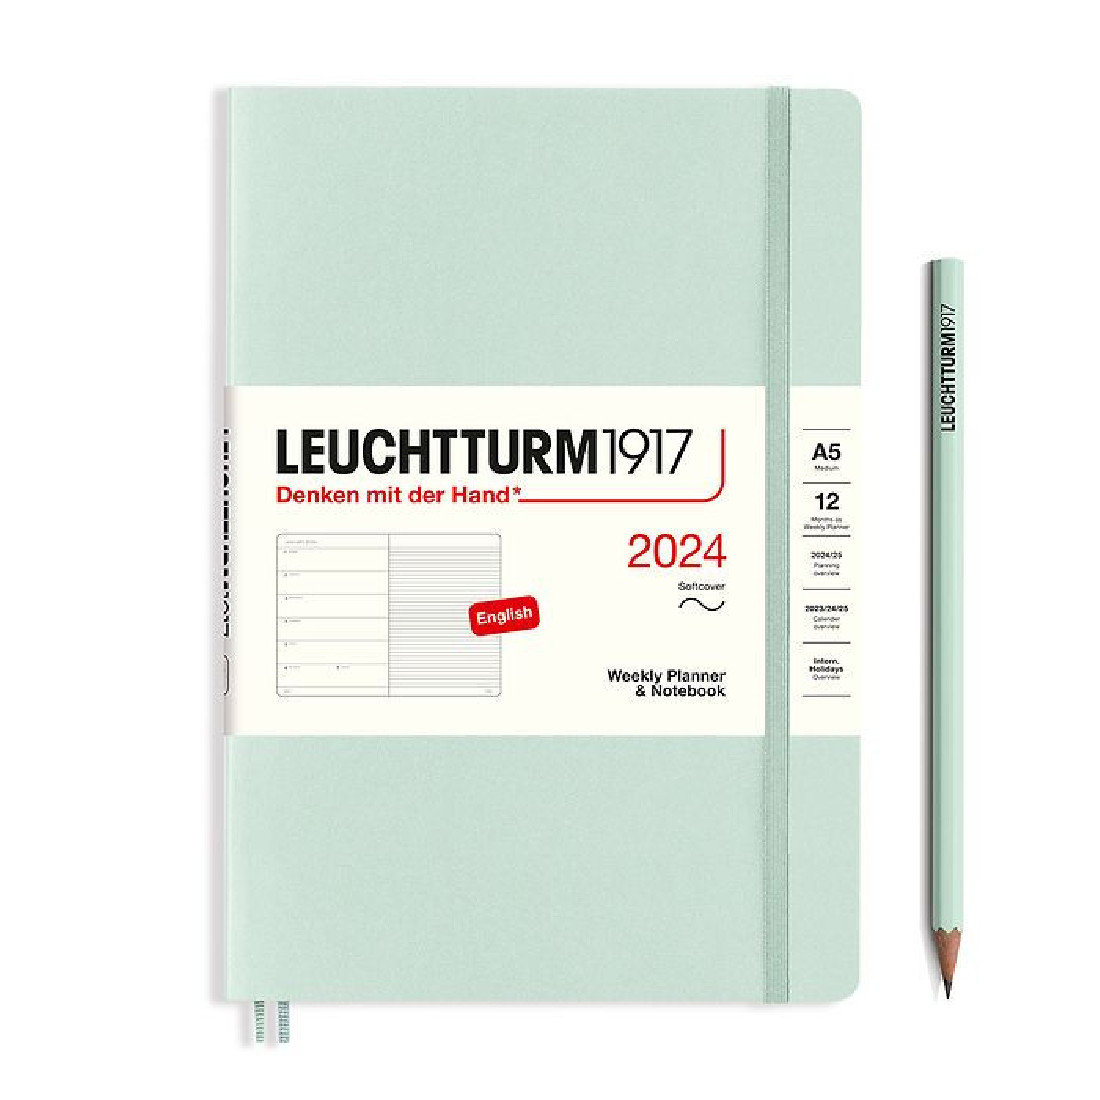 Leuchtturm 1917 Weekly Planner and Notebook 2024 Mint Green Medium A5 Soft Cover